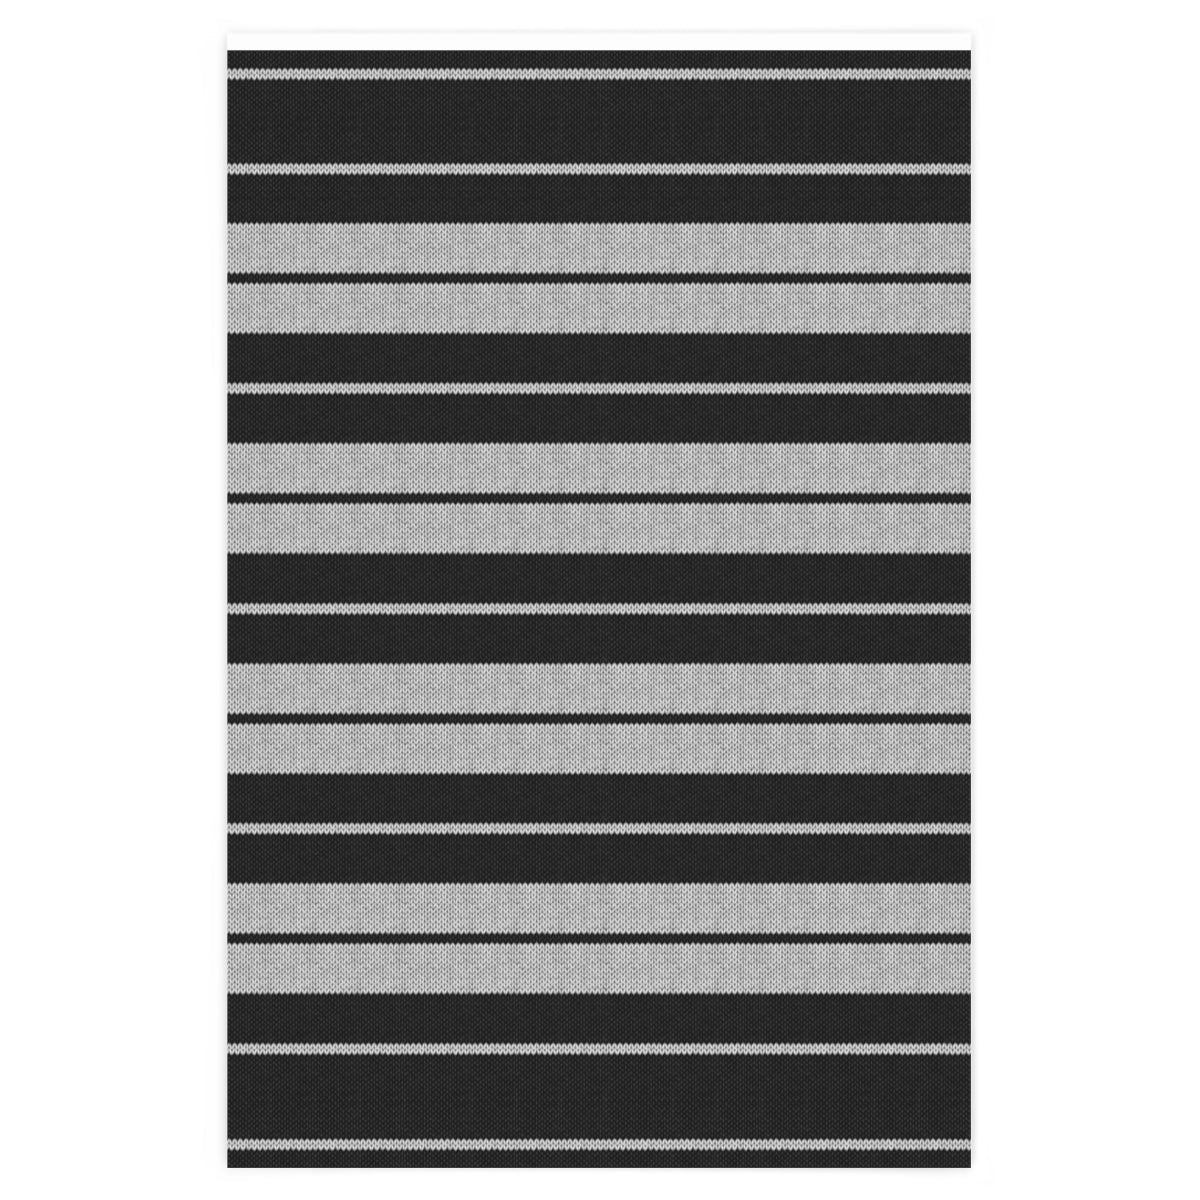 OG Charlie Brown Stripe (Black & White) - Wrapping Paper